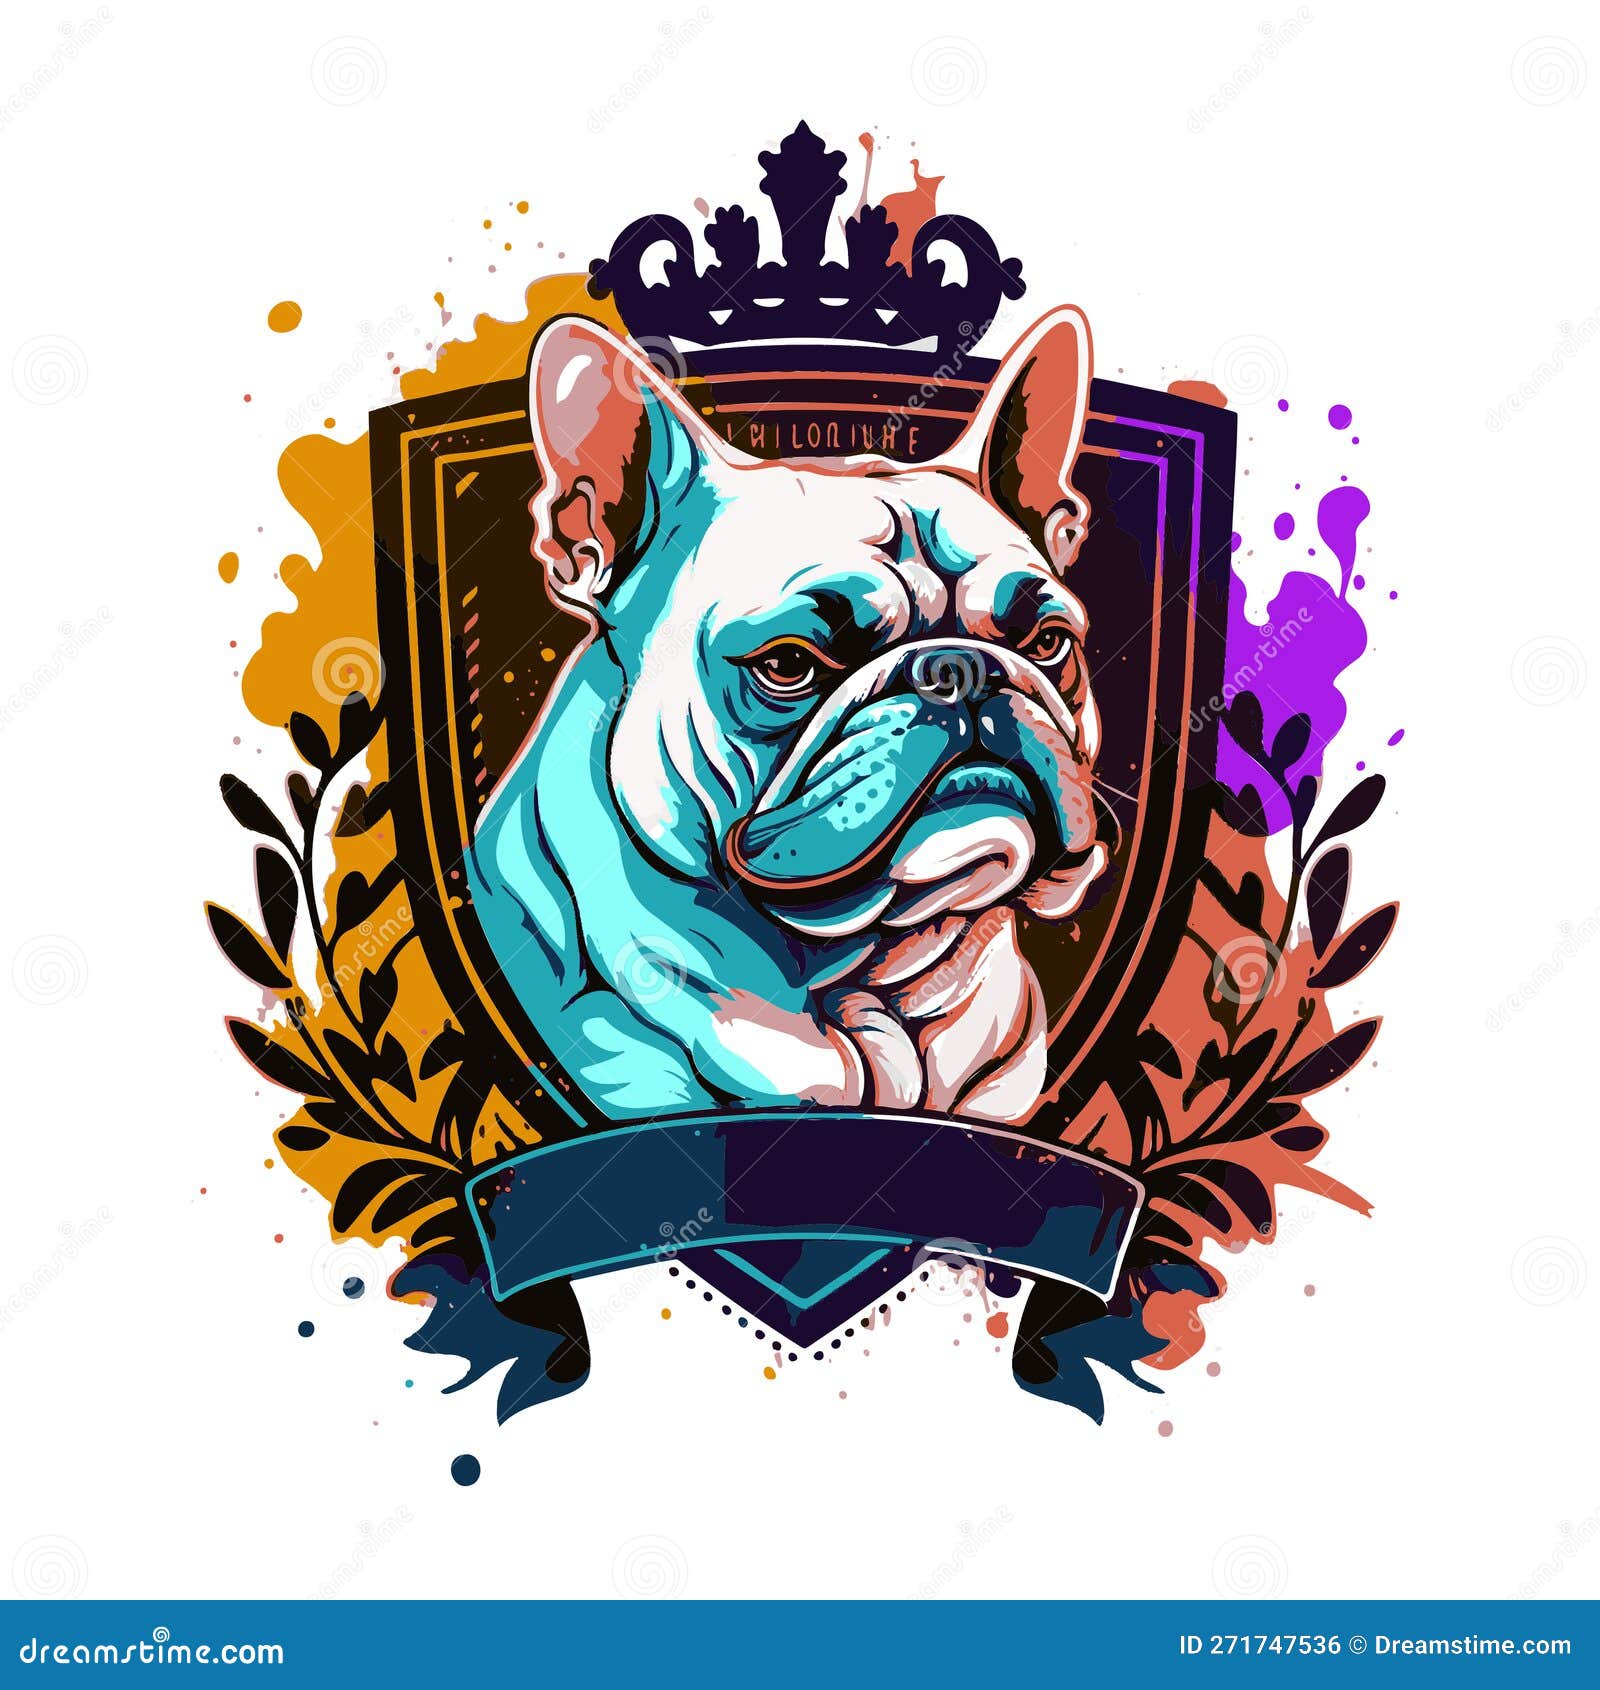 frenchie french bulldog dog mascot character logo  with badges